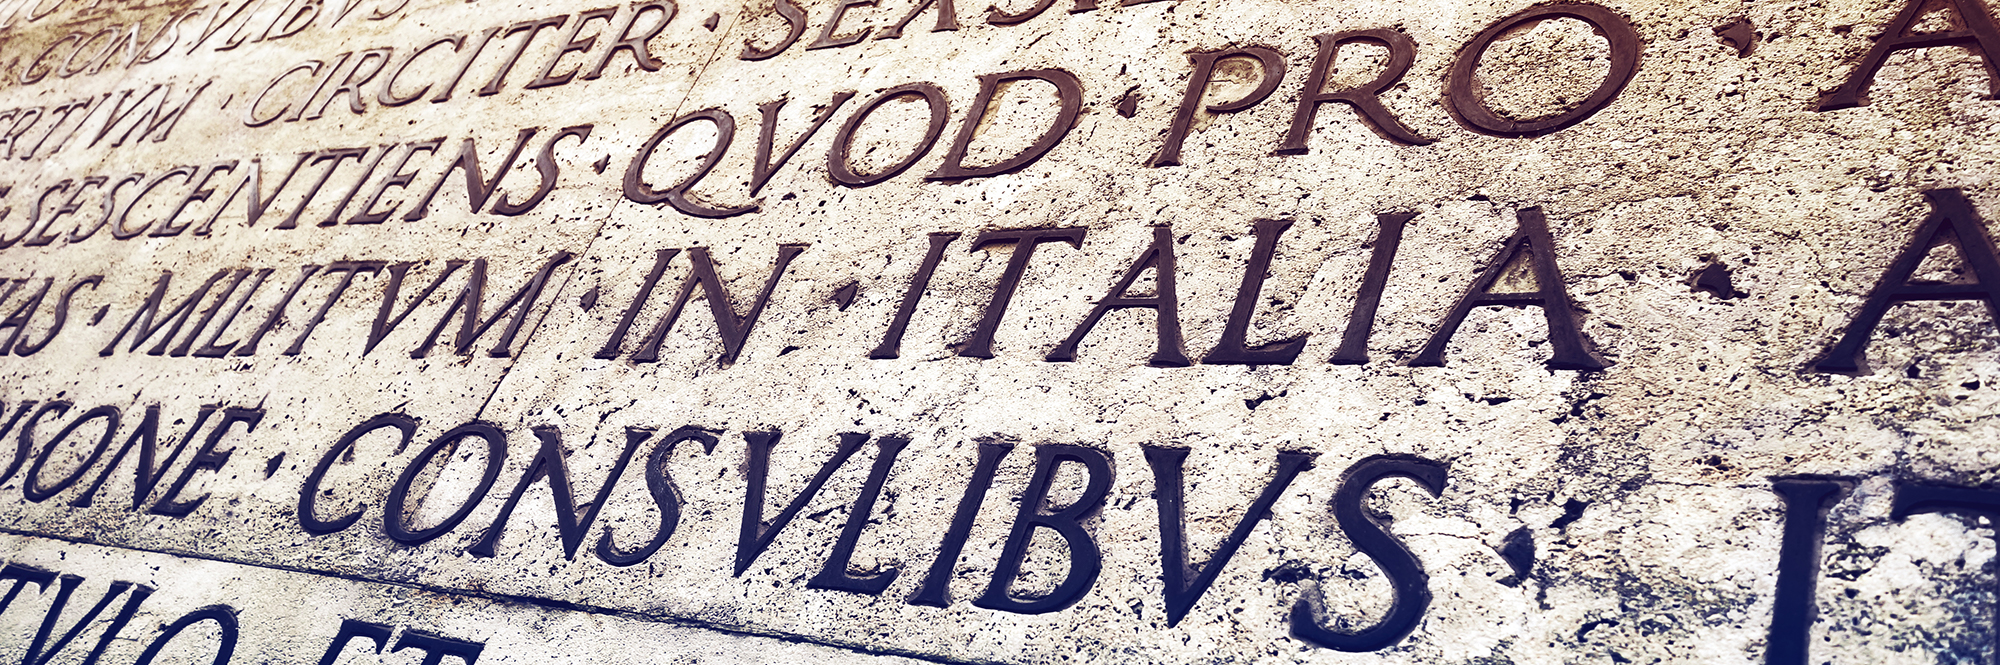 Latin text on stone